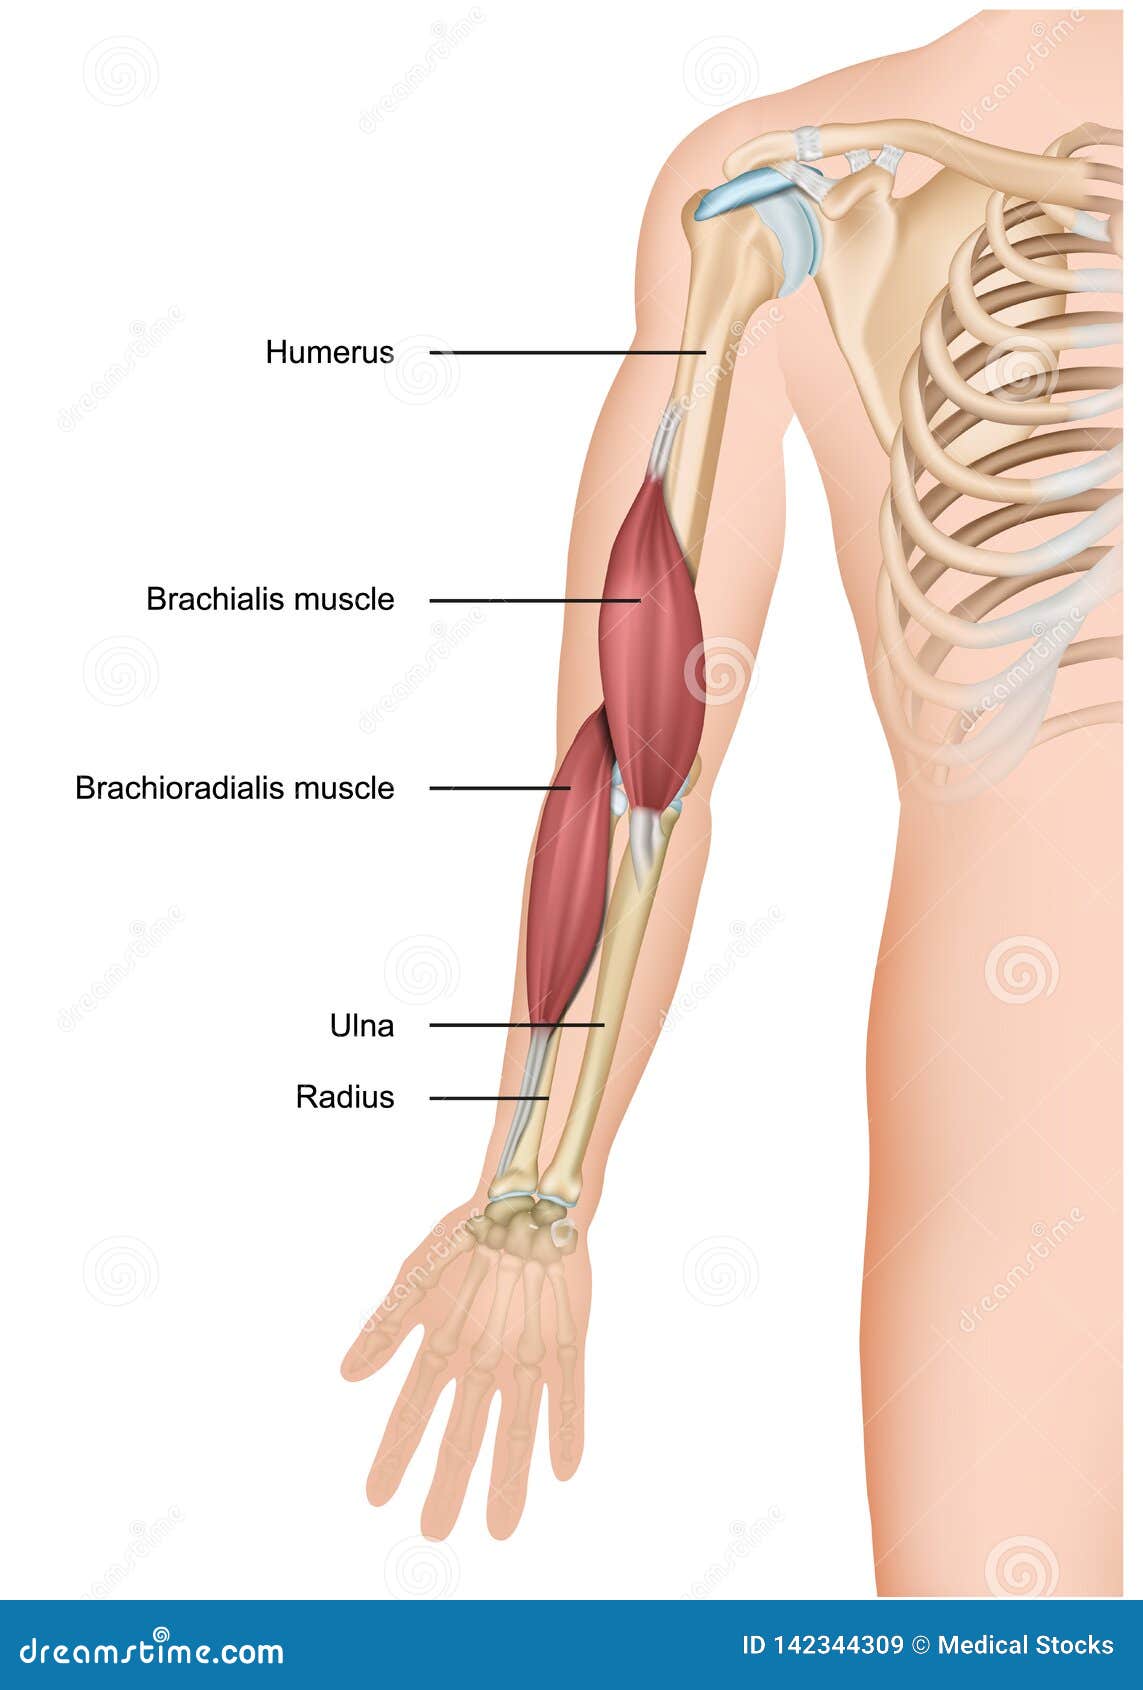 brachialis arthritis hogyan kell kezelni)